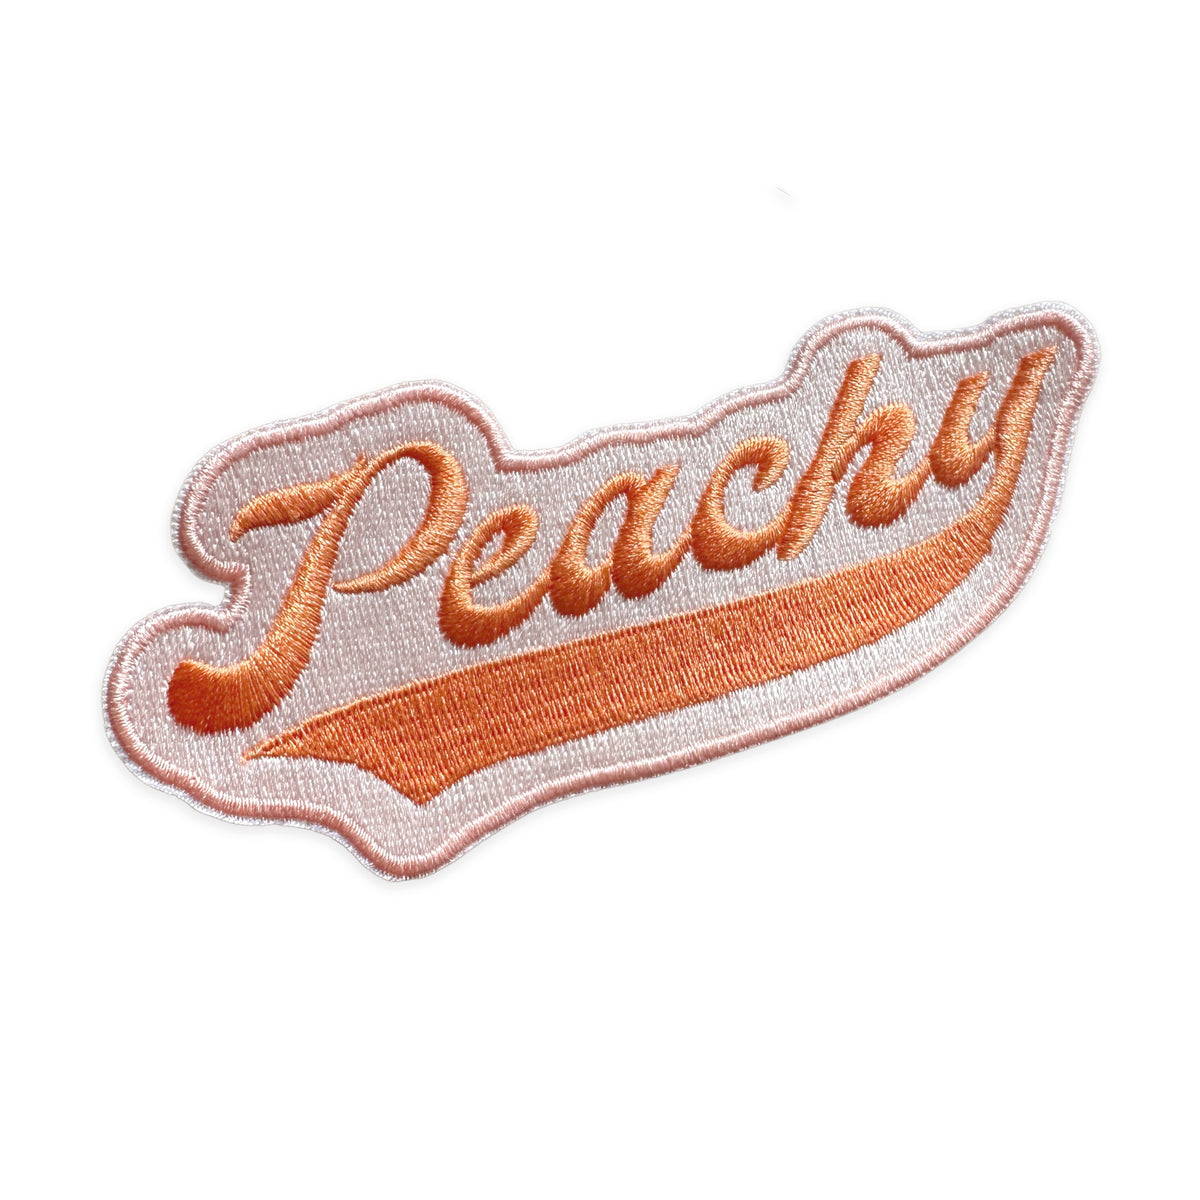 Peachy Iron On Patch